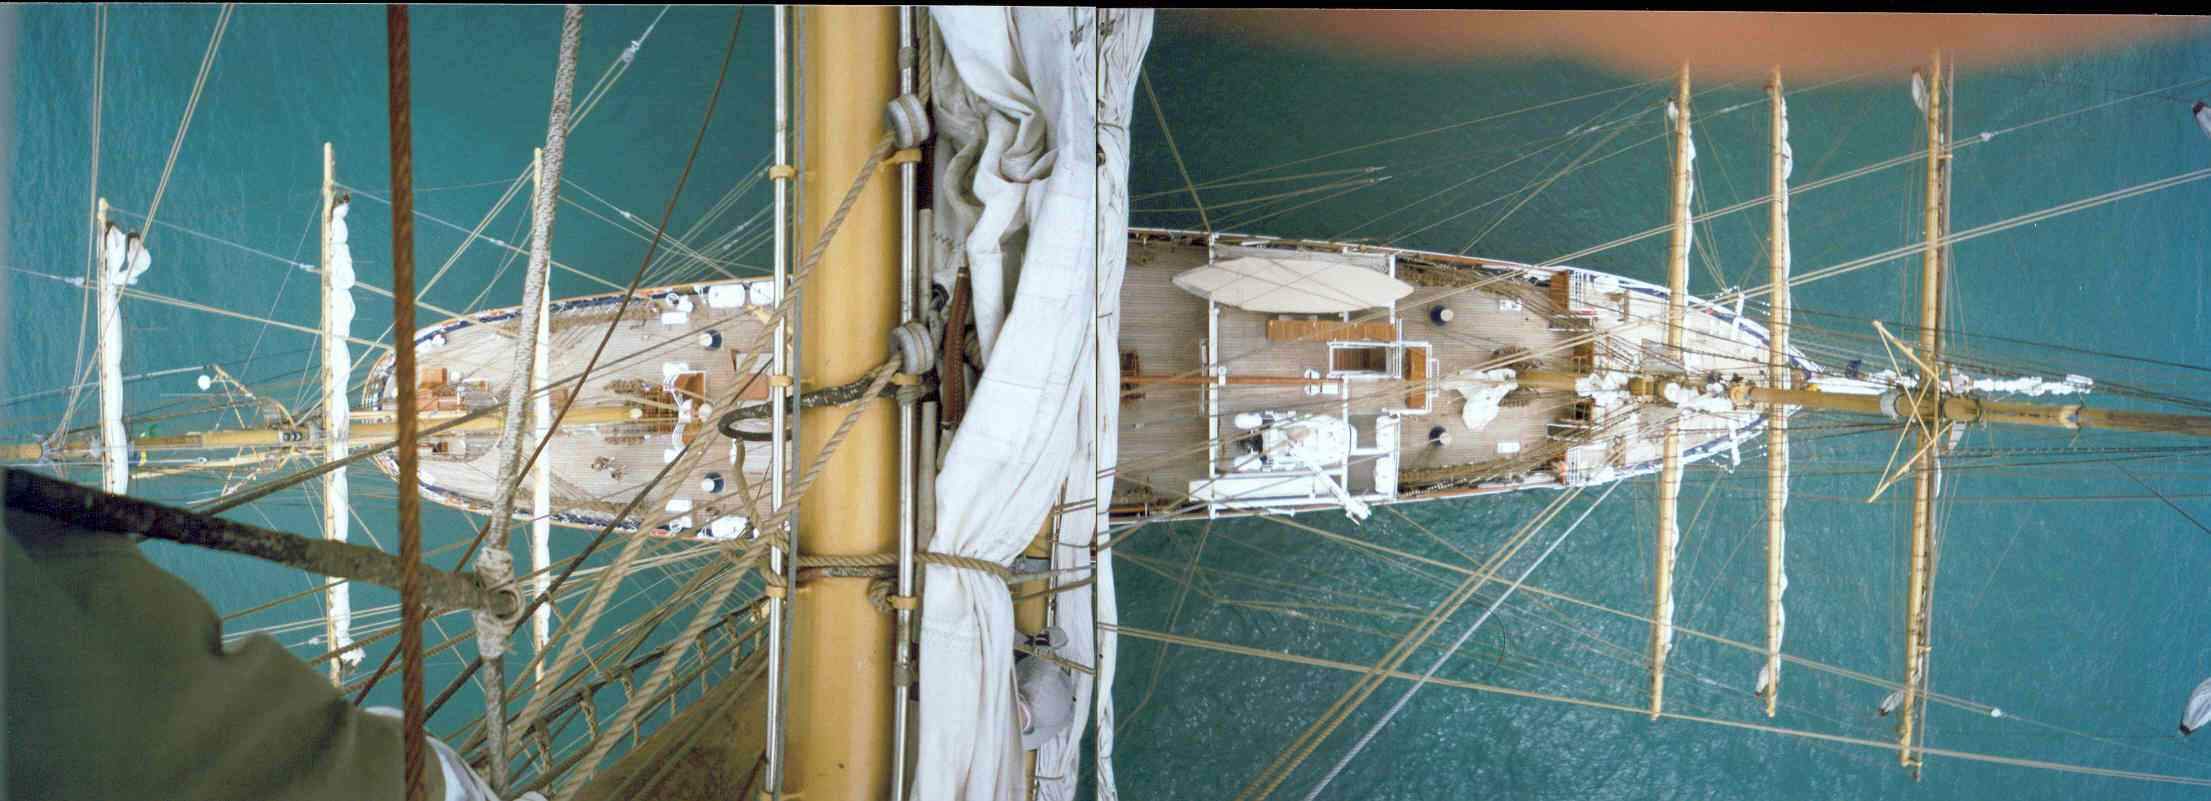 Vista superior do Cisne Branco, fotografada do topo do mastro principal. (foto: Gustavo)